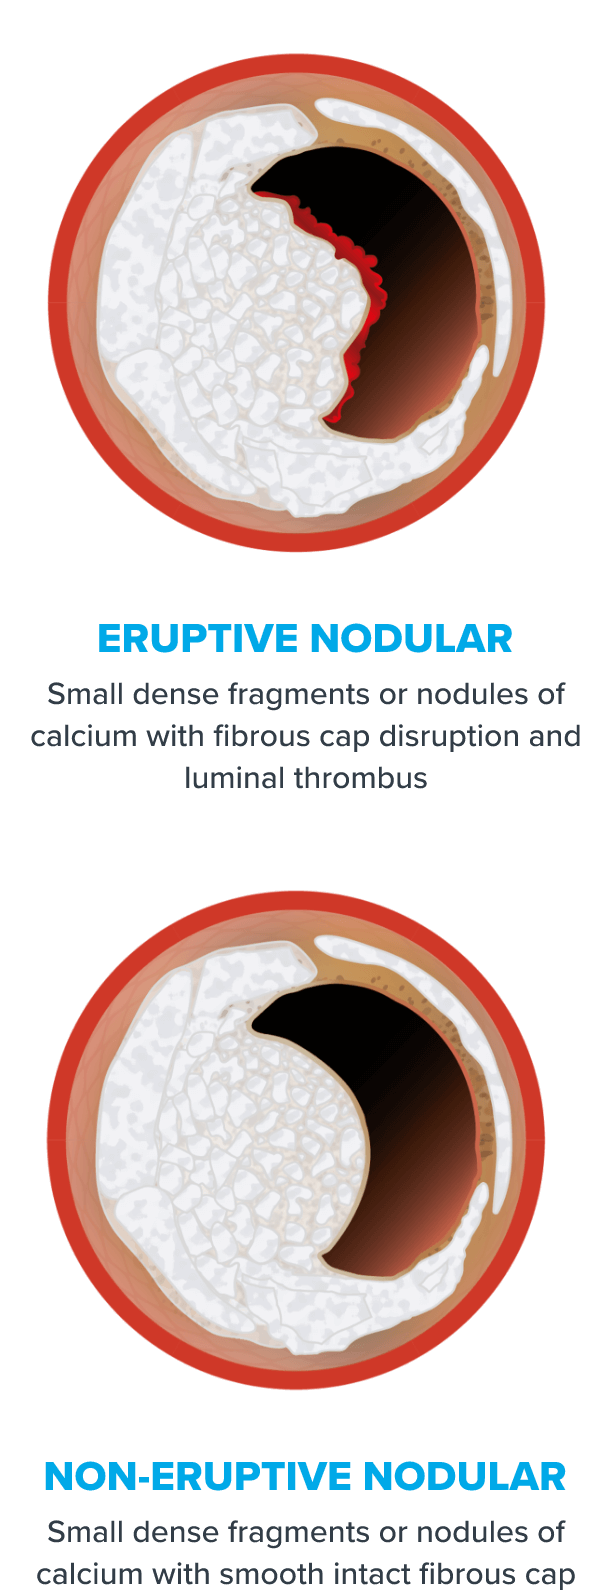 eruptive and non-eruptive calcified nodules